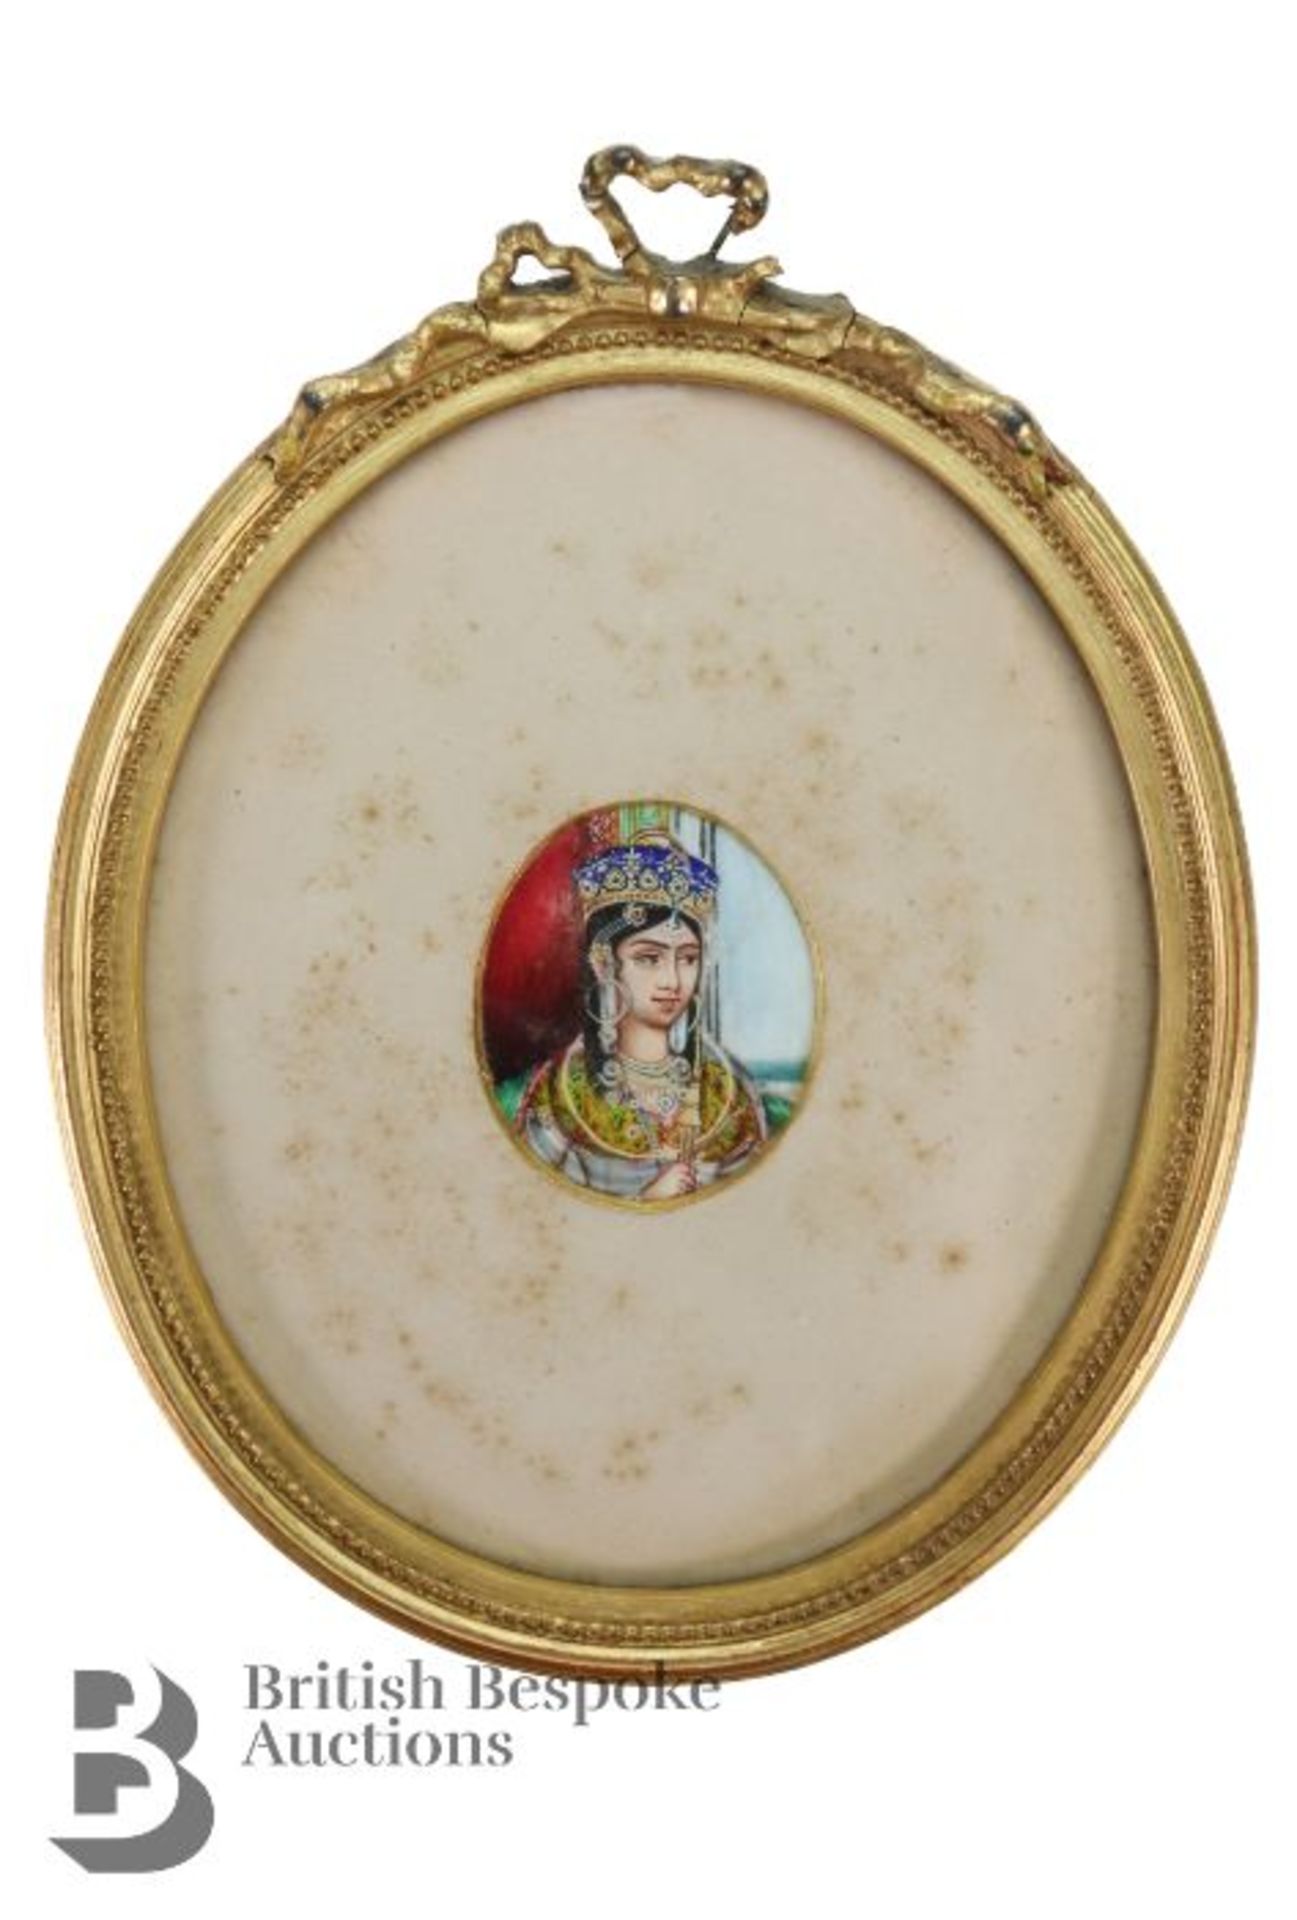 Indian Portrait Miniature - Begum Sumroo